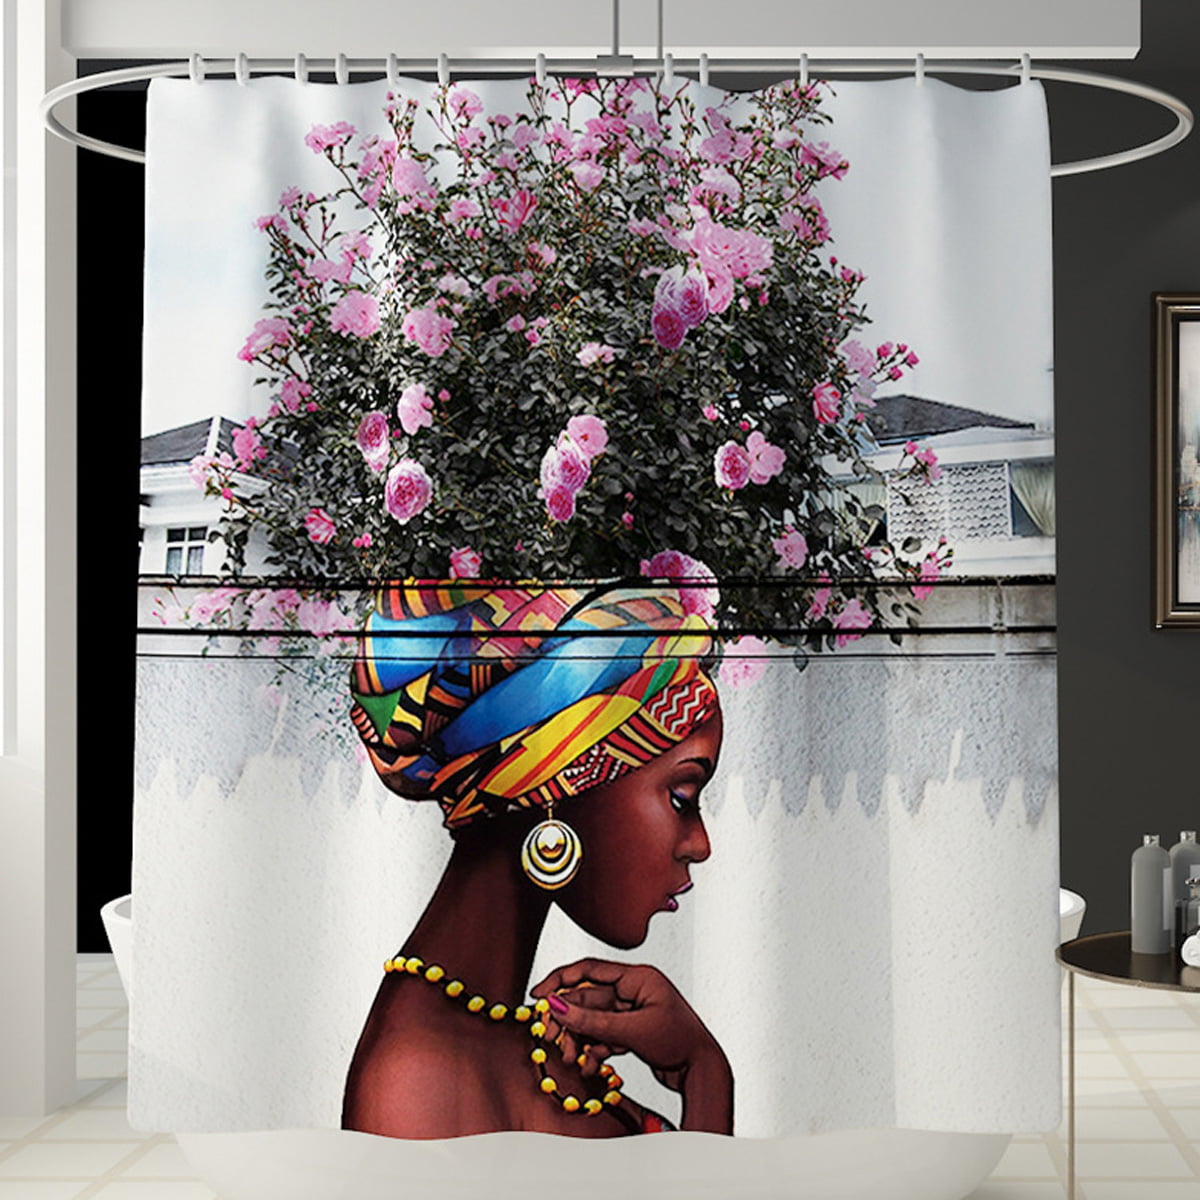 Novashion Black Girl Shower Curtain, Shower Curtain With Black Woman